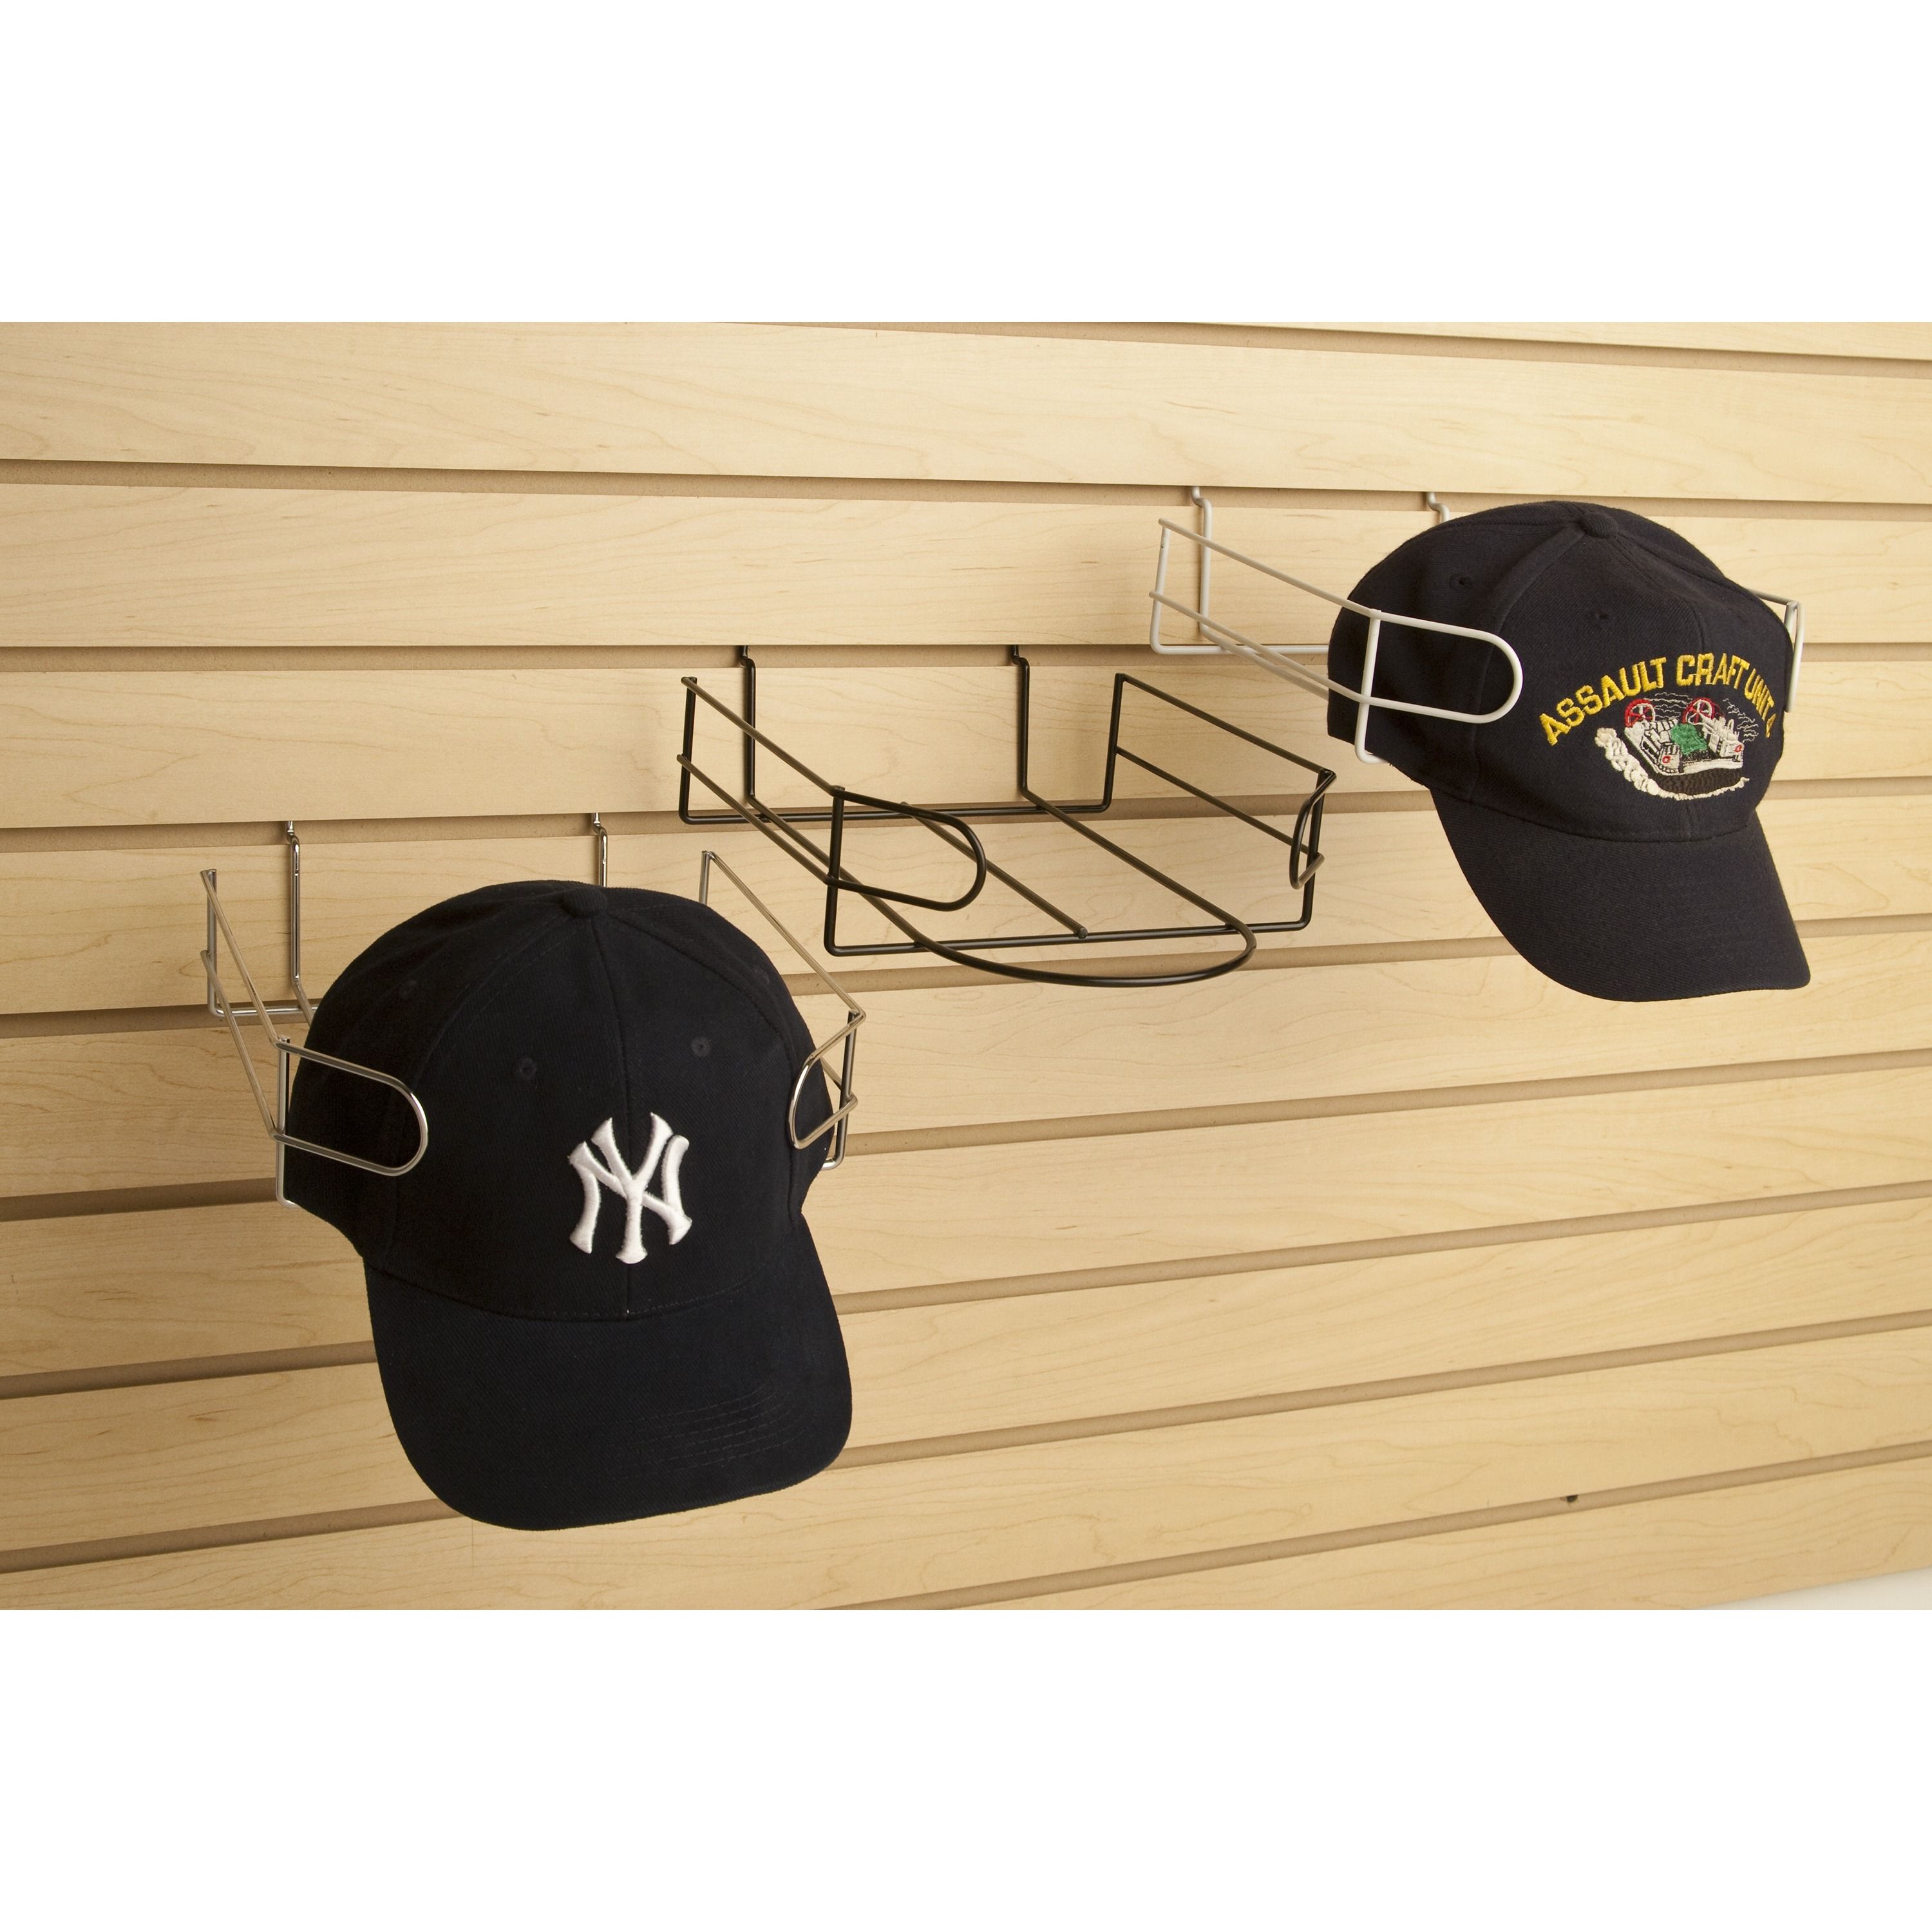 Slatwall Cap Holder, Baseball Cap Display For Slatwall Subastral